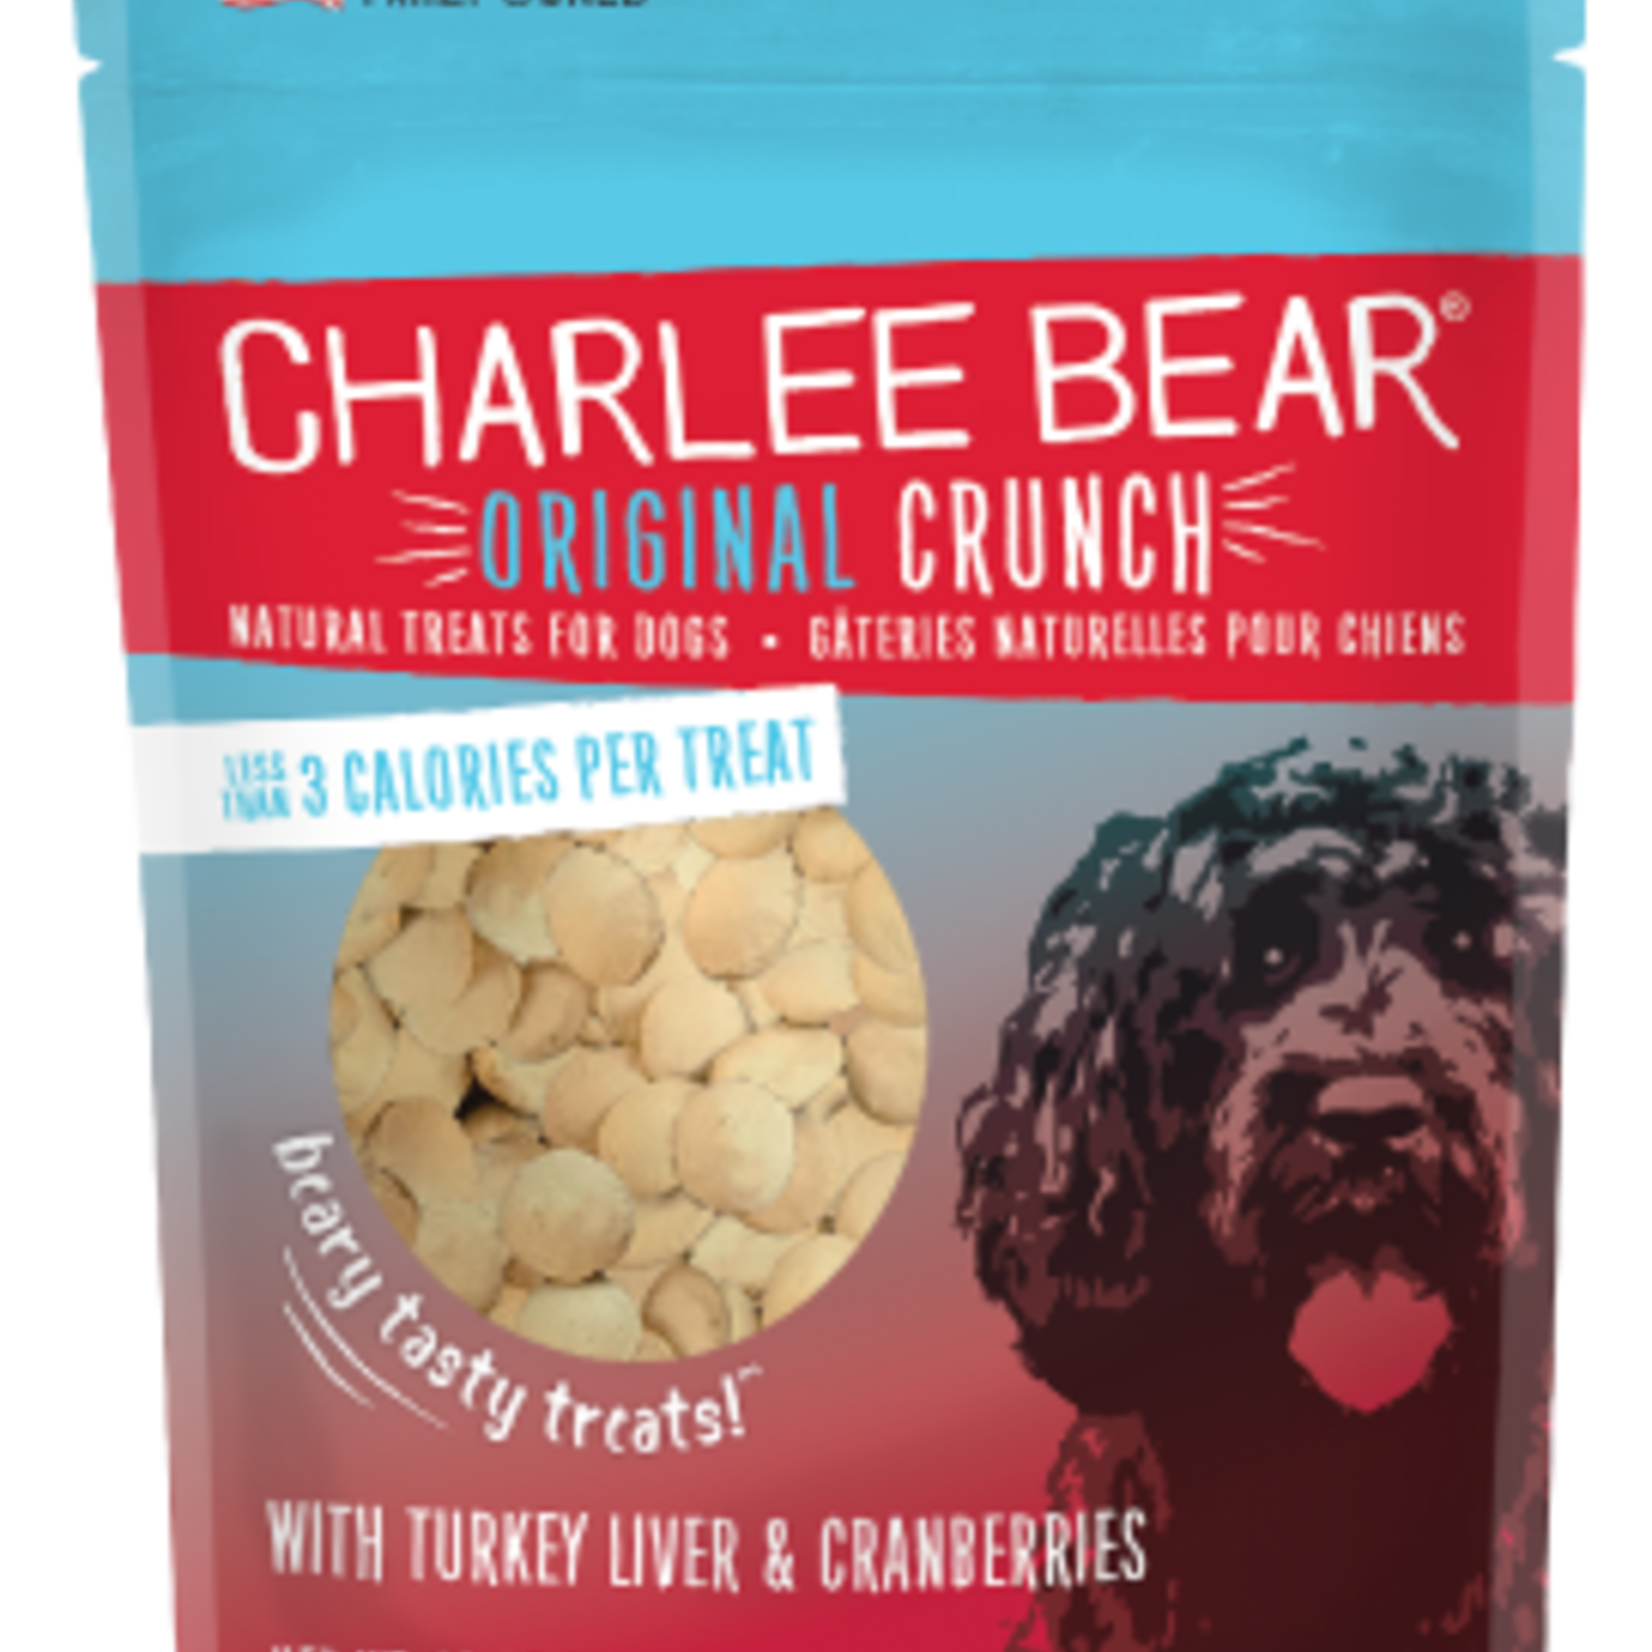 Charlee Bear Charlee Bear Original Crunch with Turkey Liver & Cranberries